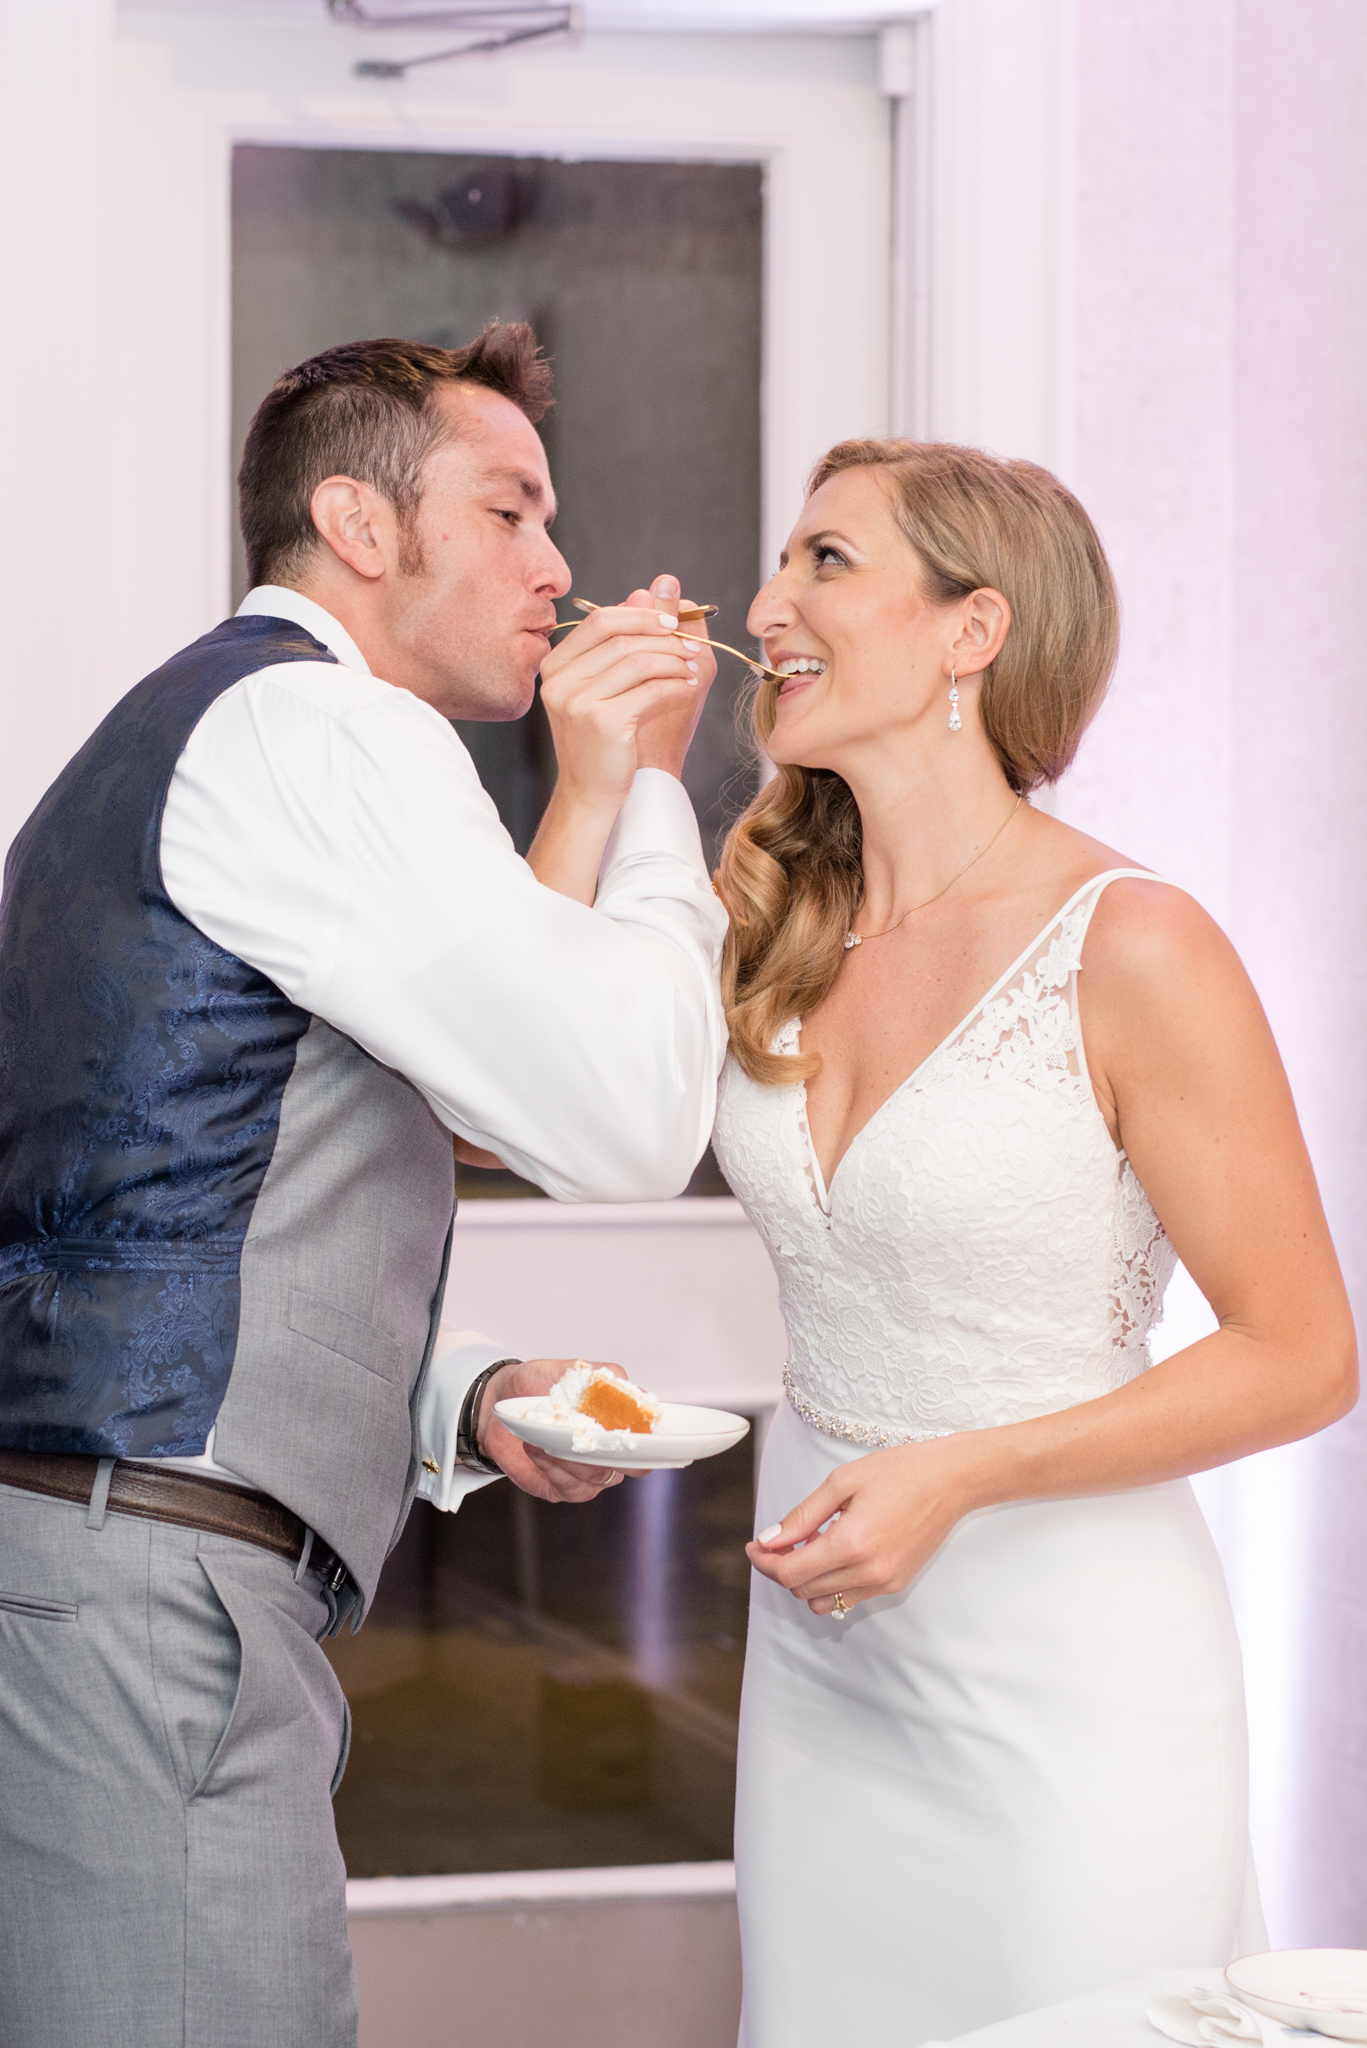 Bride and groom eat cake together.